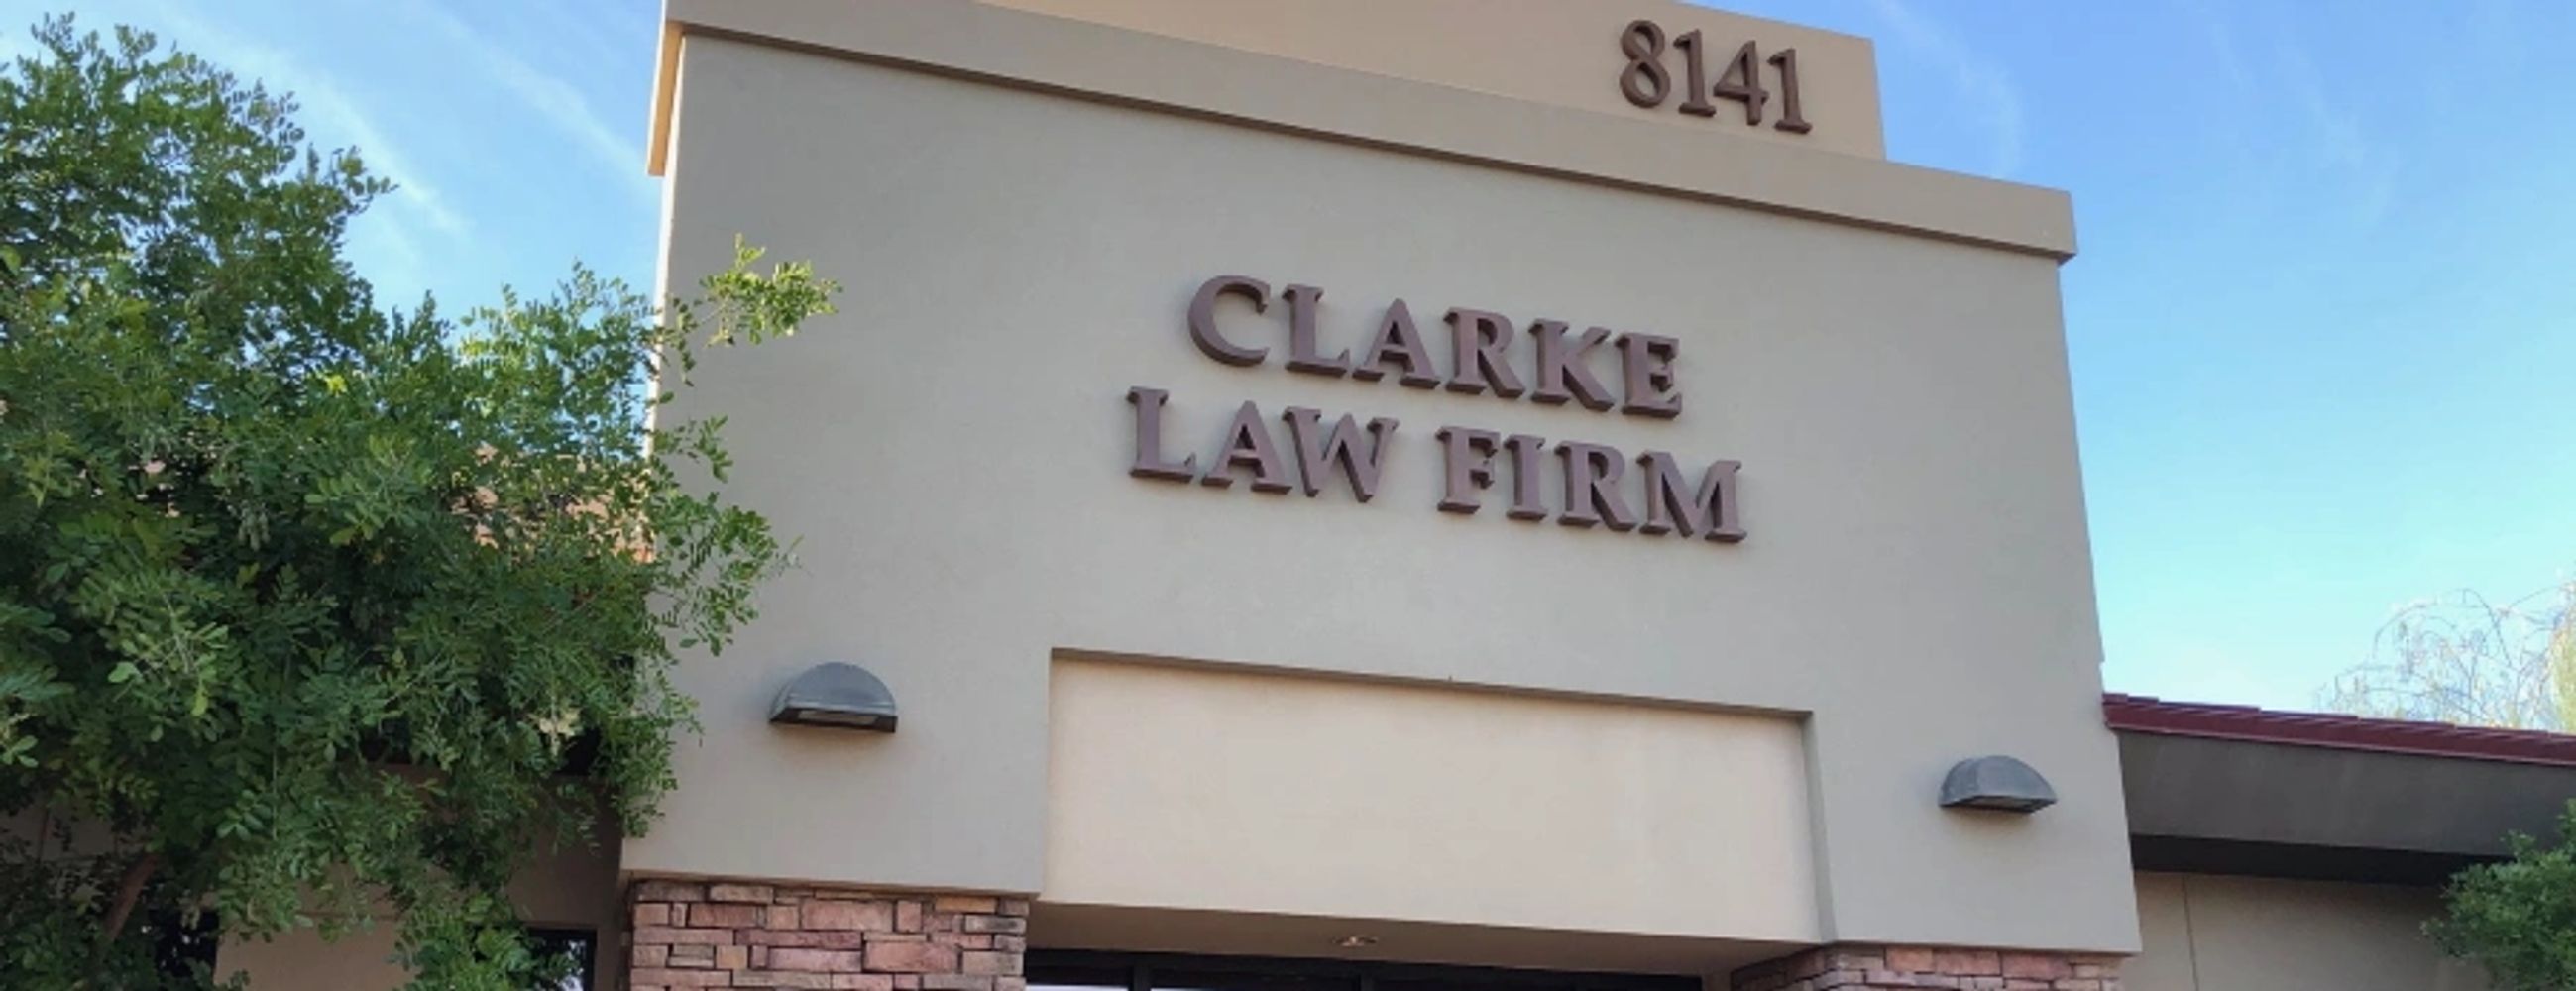 Front of Clarke Law Firm in Scottsdale, Arizona